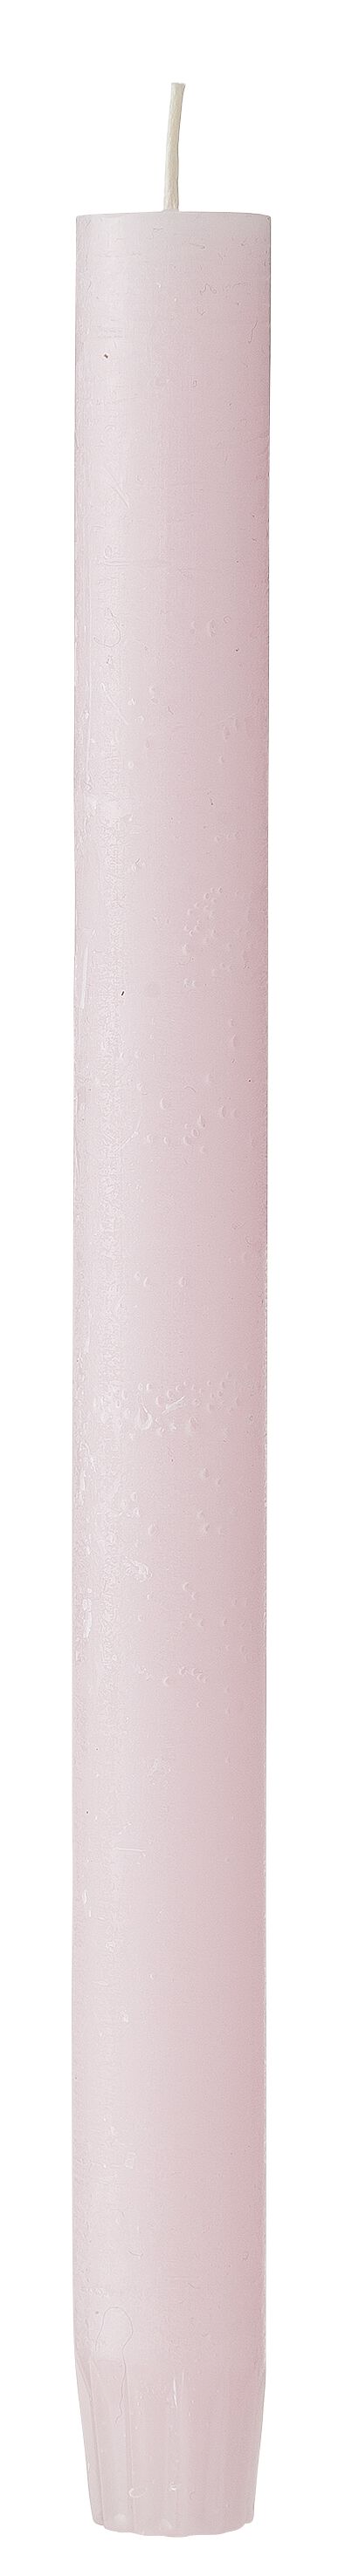 bougies rustiques rose pâle - 1000015367 - HEMA